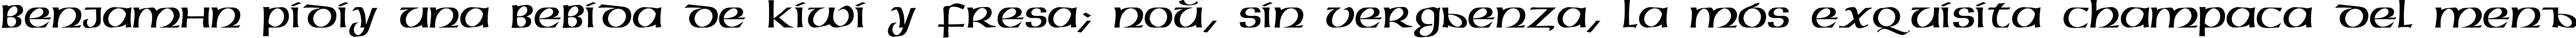 Пример написания шрифтом Megen Rus текста на испанском